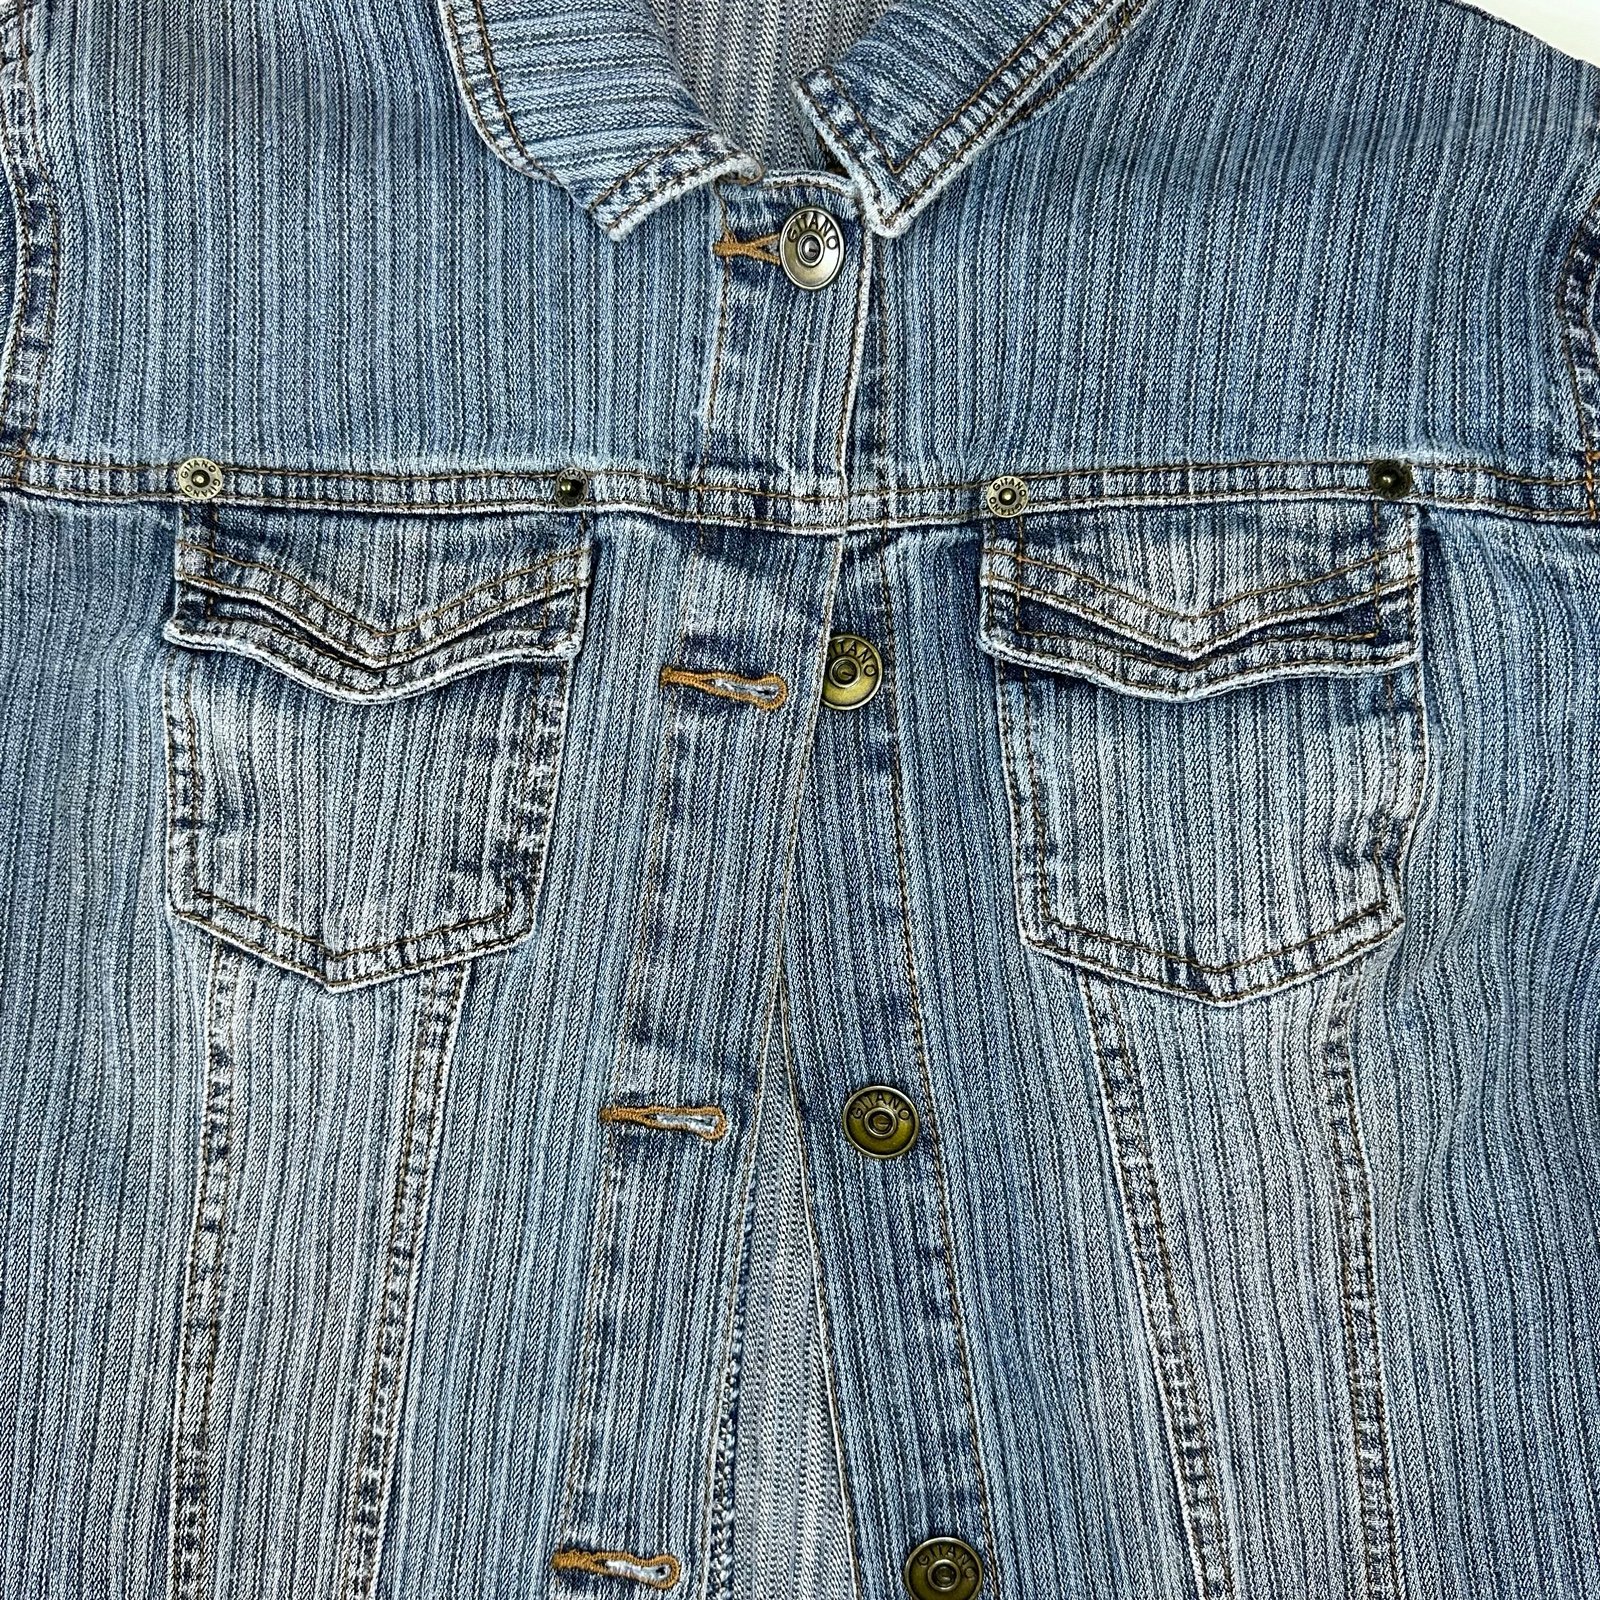 Popular Vintage Gitano Jean Jacket Women´s Medium Buttoned Rib Textured Breast Pockets JMMu2Zewz on sale